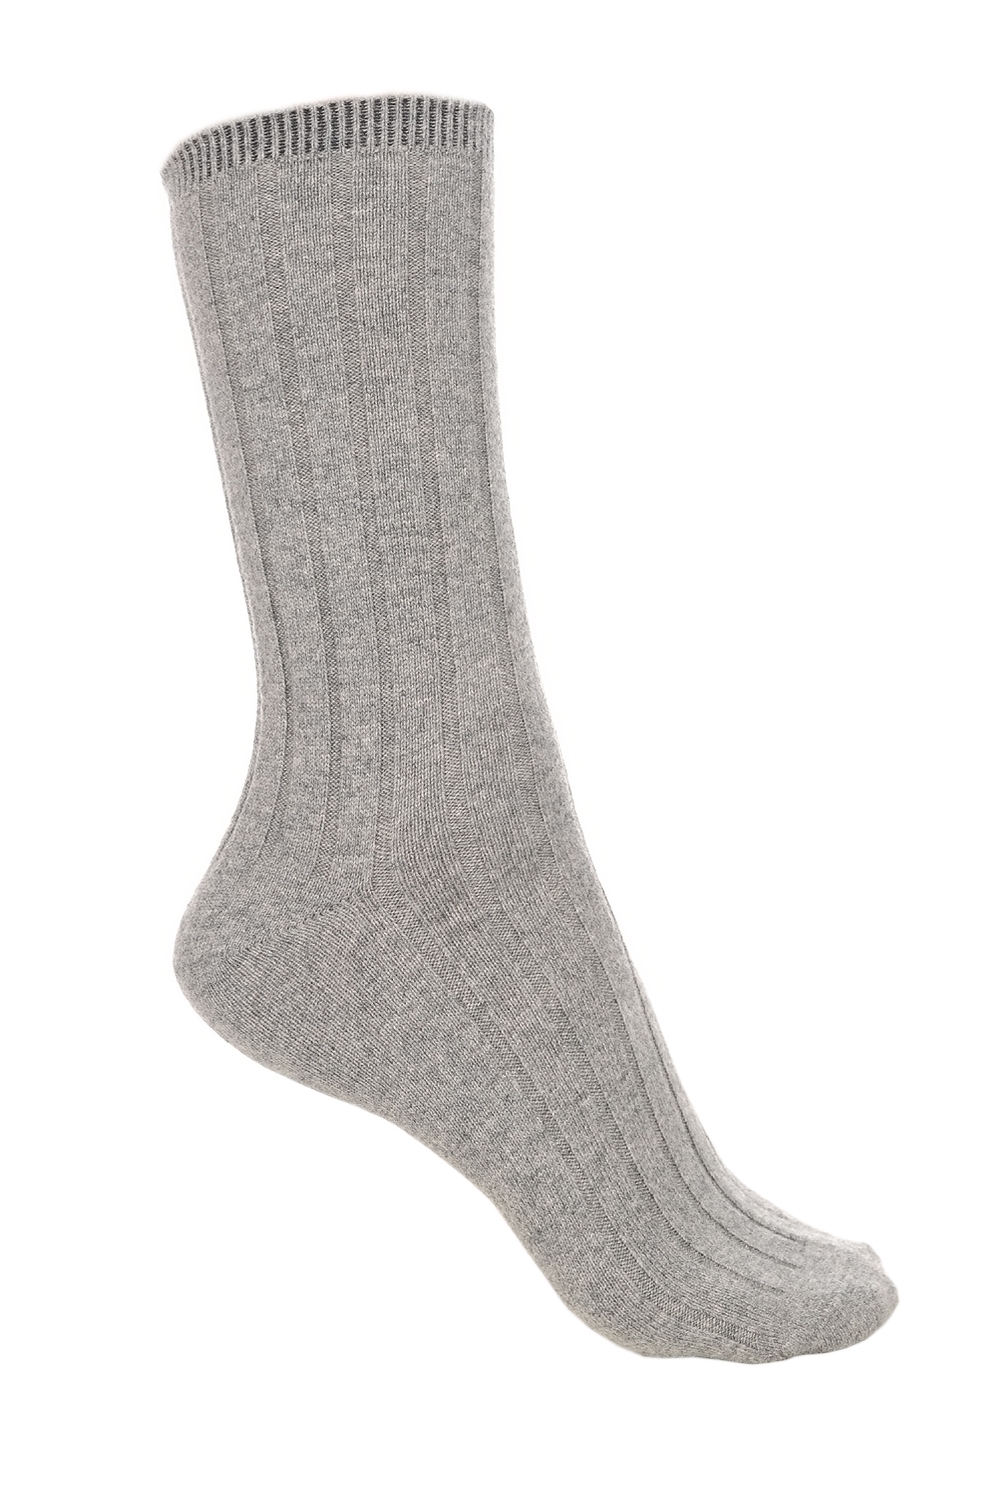 Cashmere & Elastane accessories socks dragibus w grey marl 5 5 8 39 42 